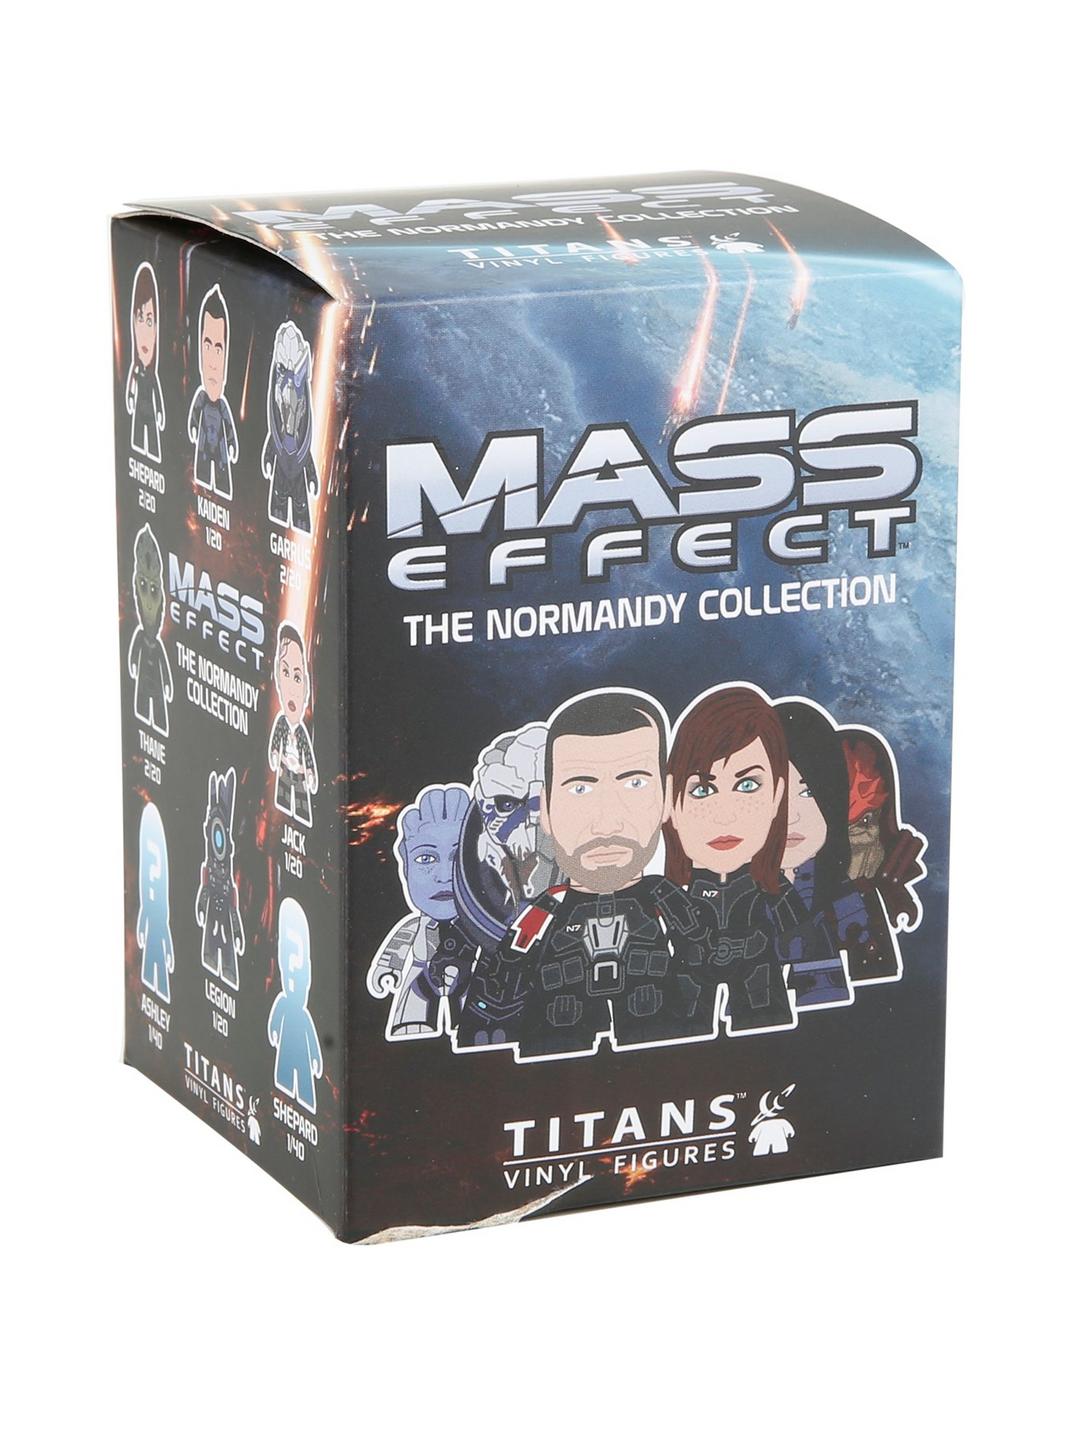 Titans Mass Effect Normandy Collection Vinyl Figure MALE SHEPARD 